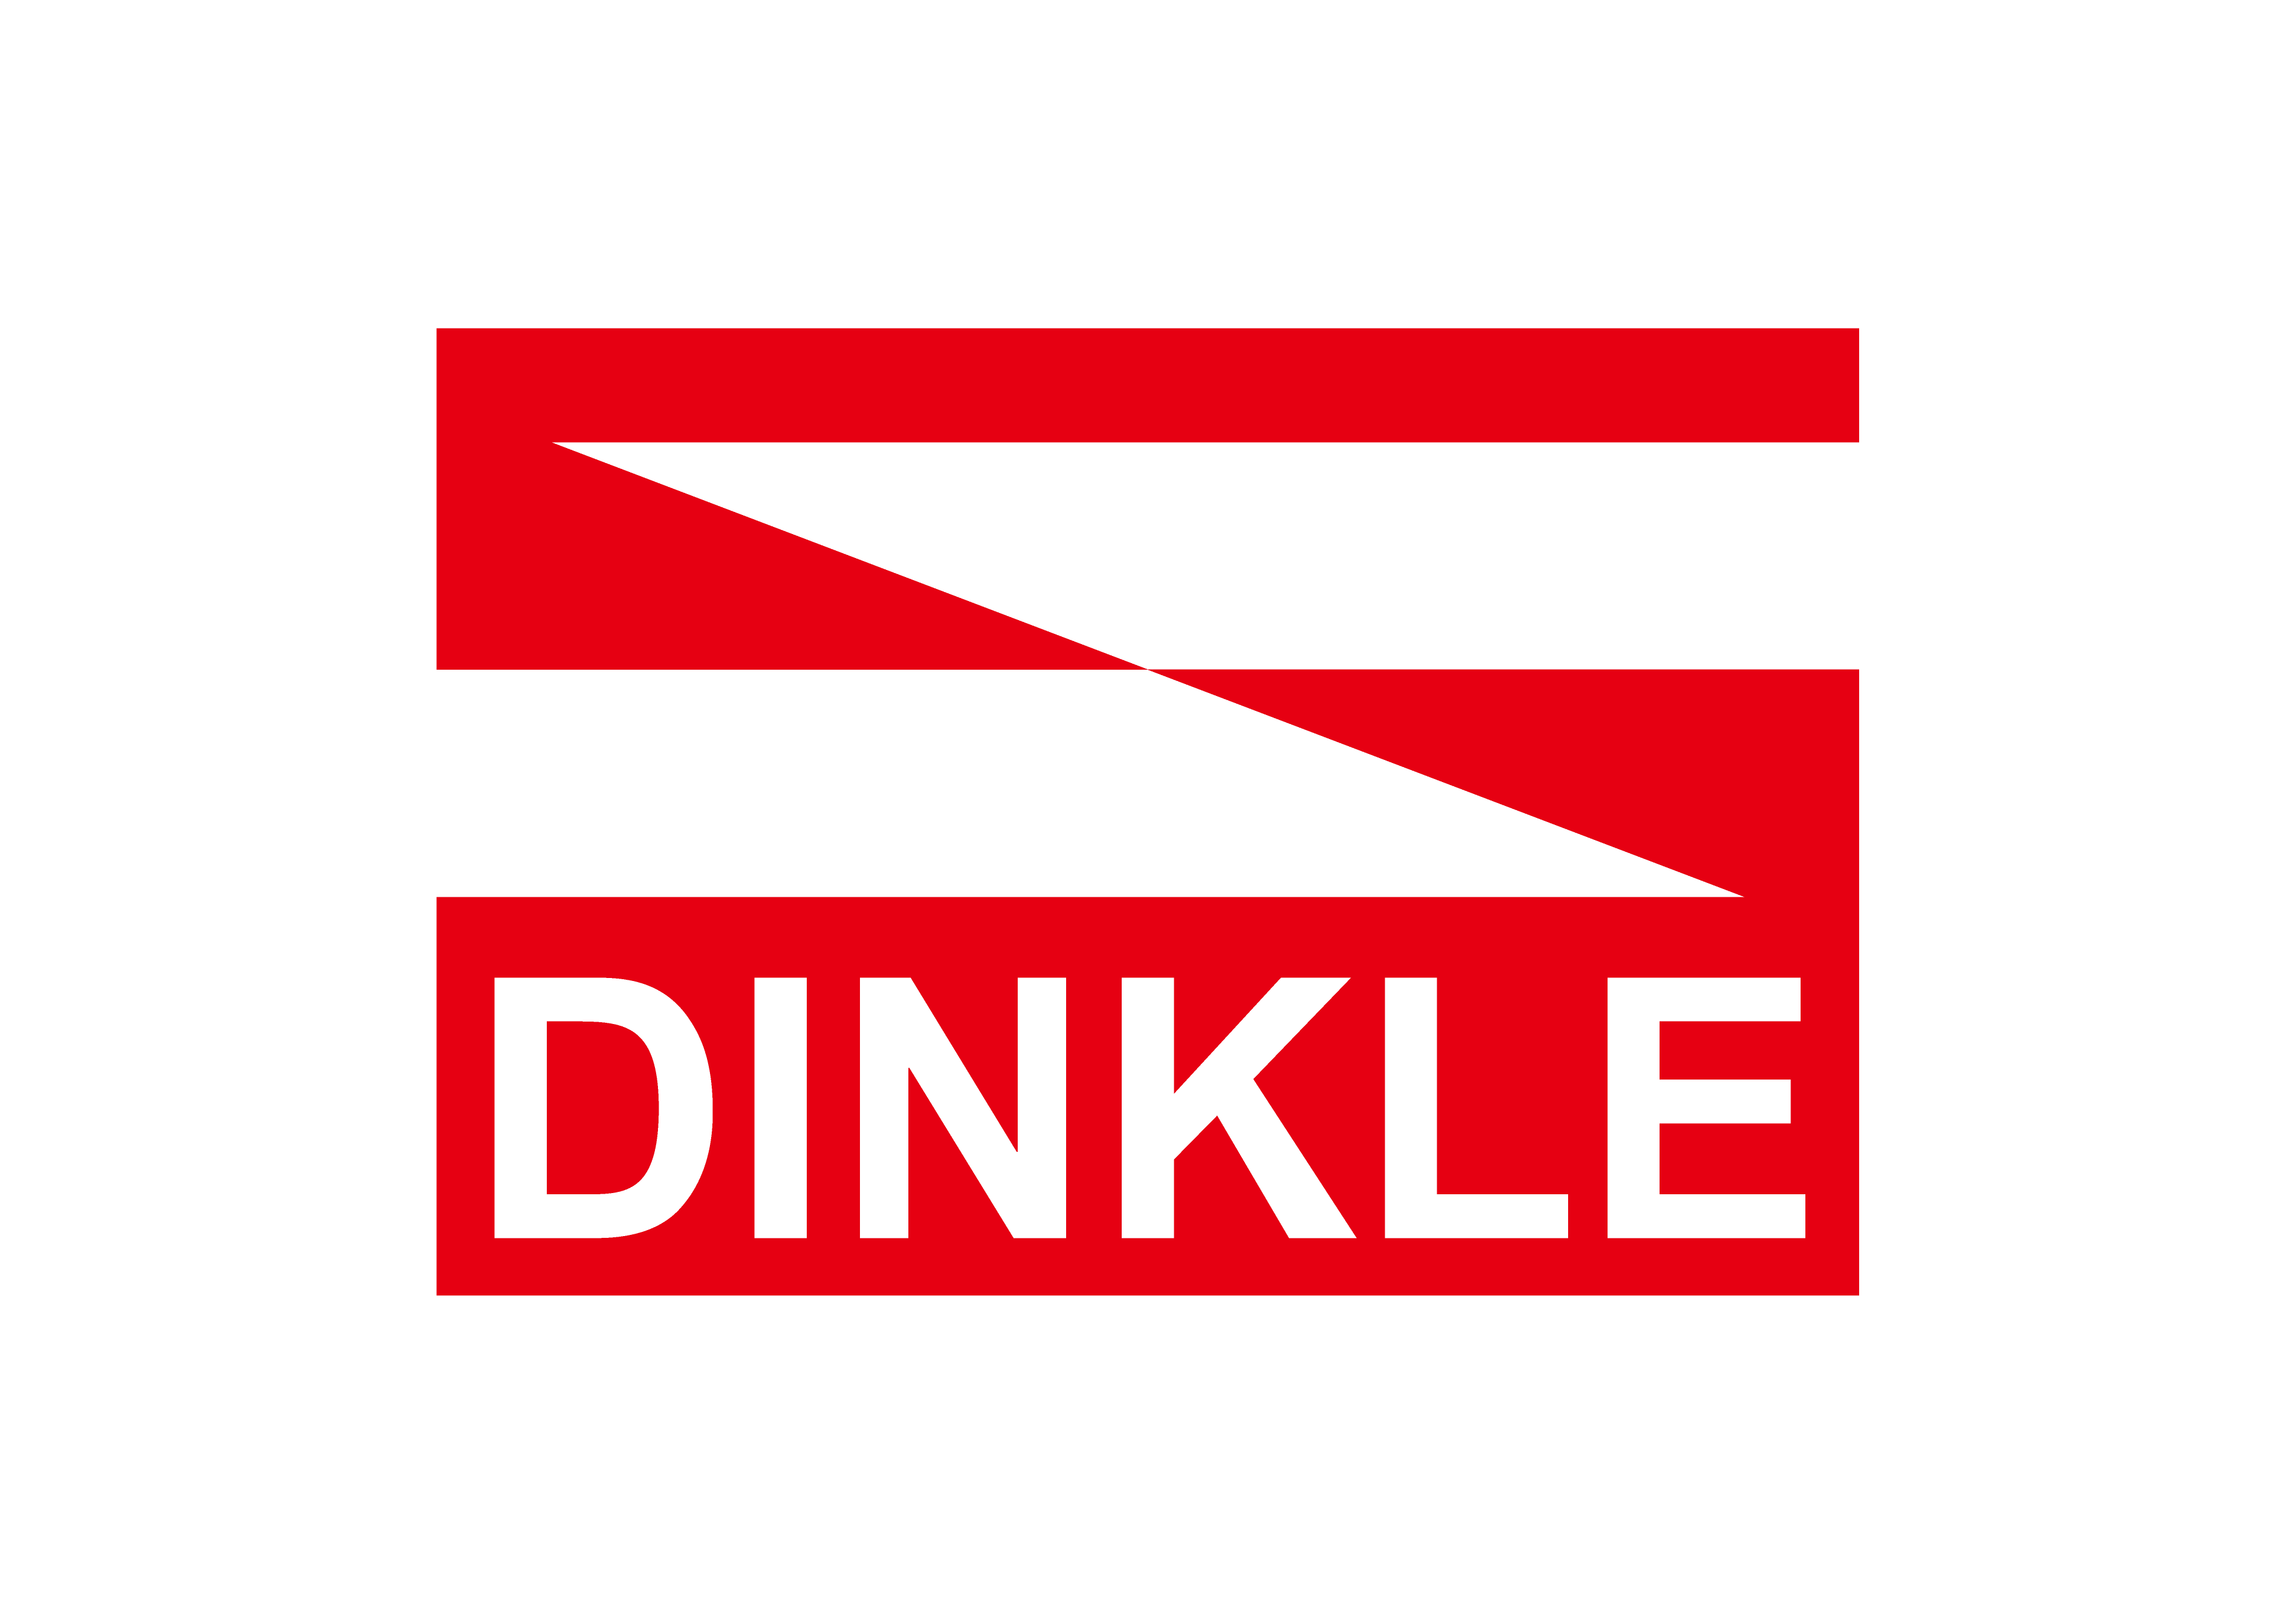 Dinkle International Co. Ltd.-ロゴ